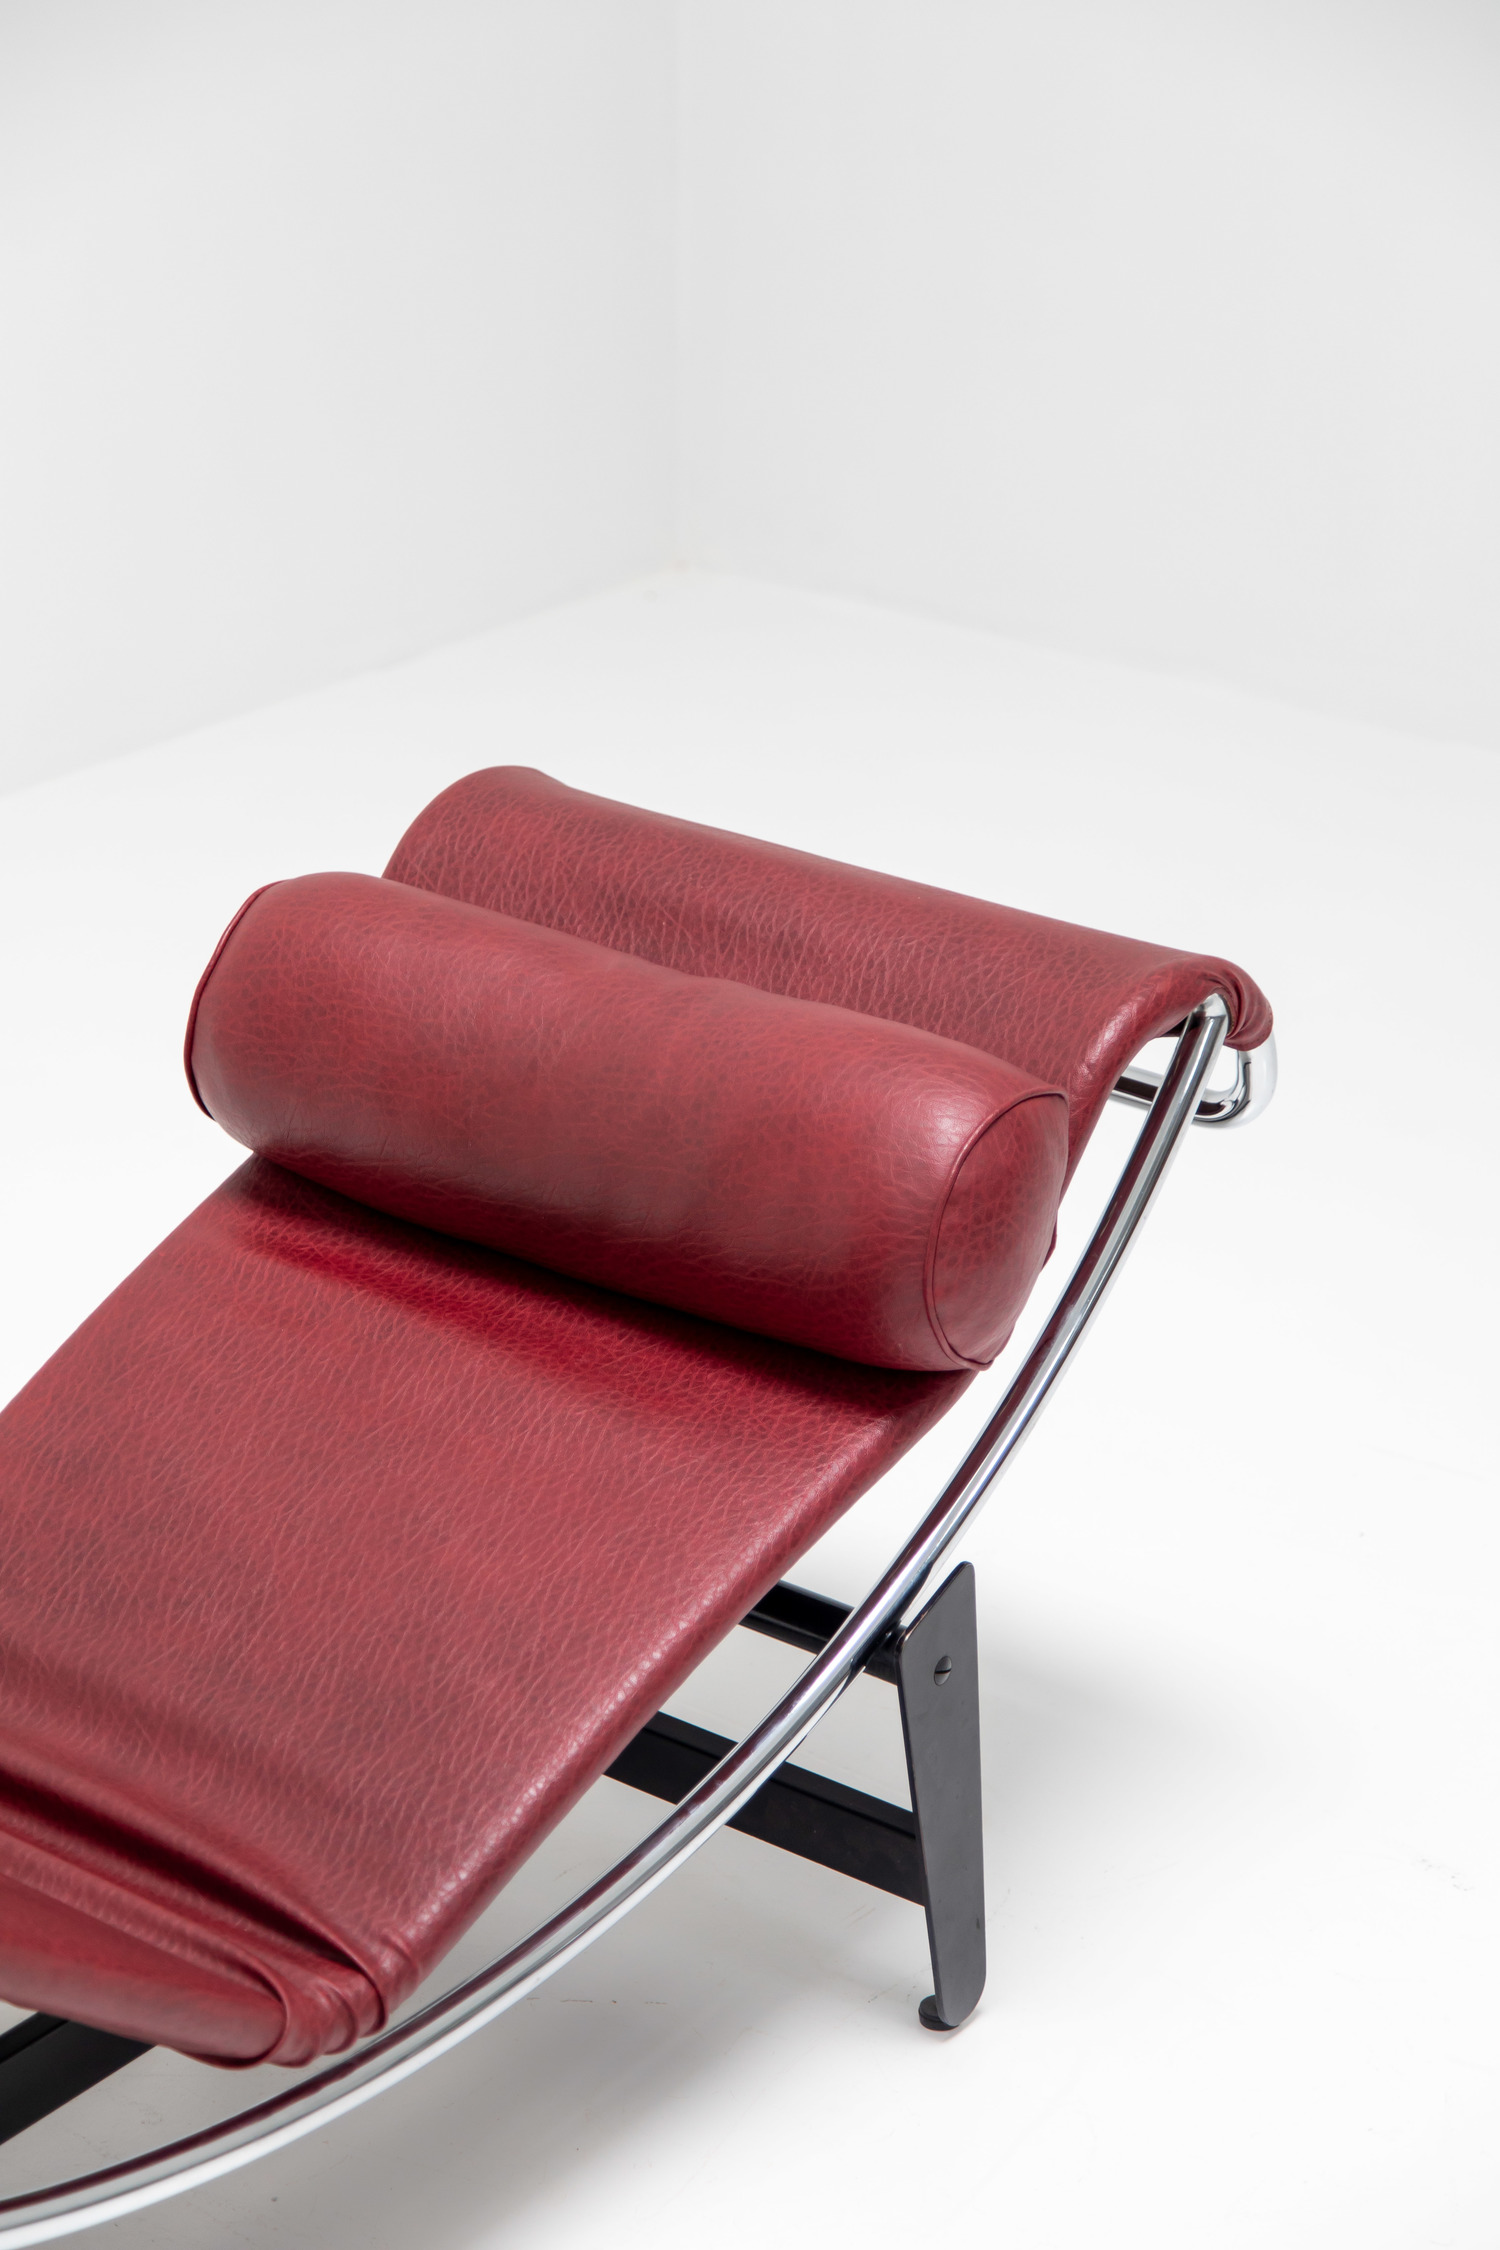 Le Corbusier 'B306' chaise longue by Wohnbedarf